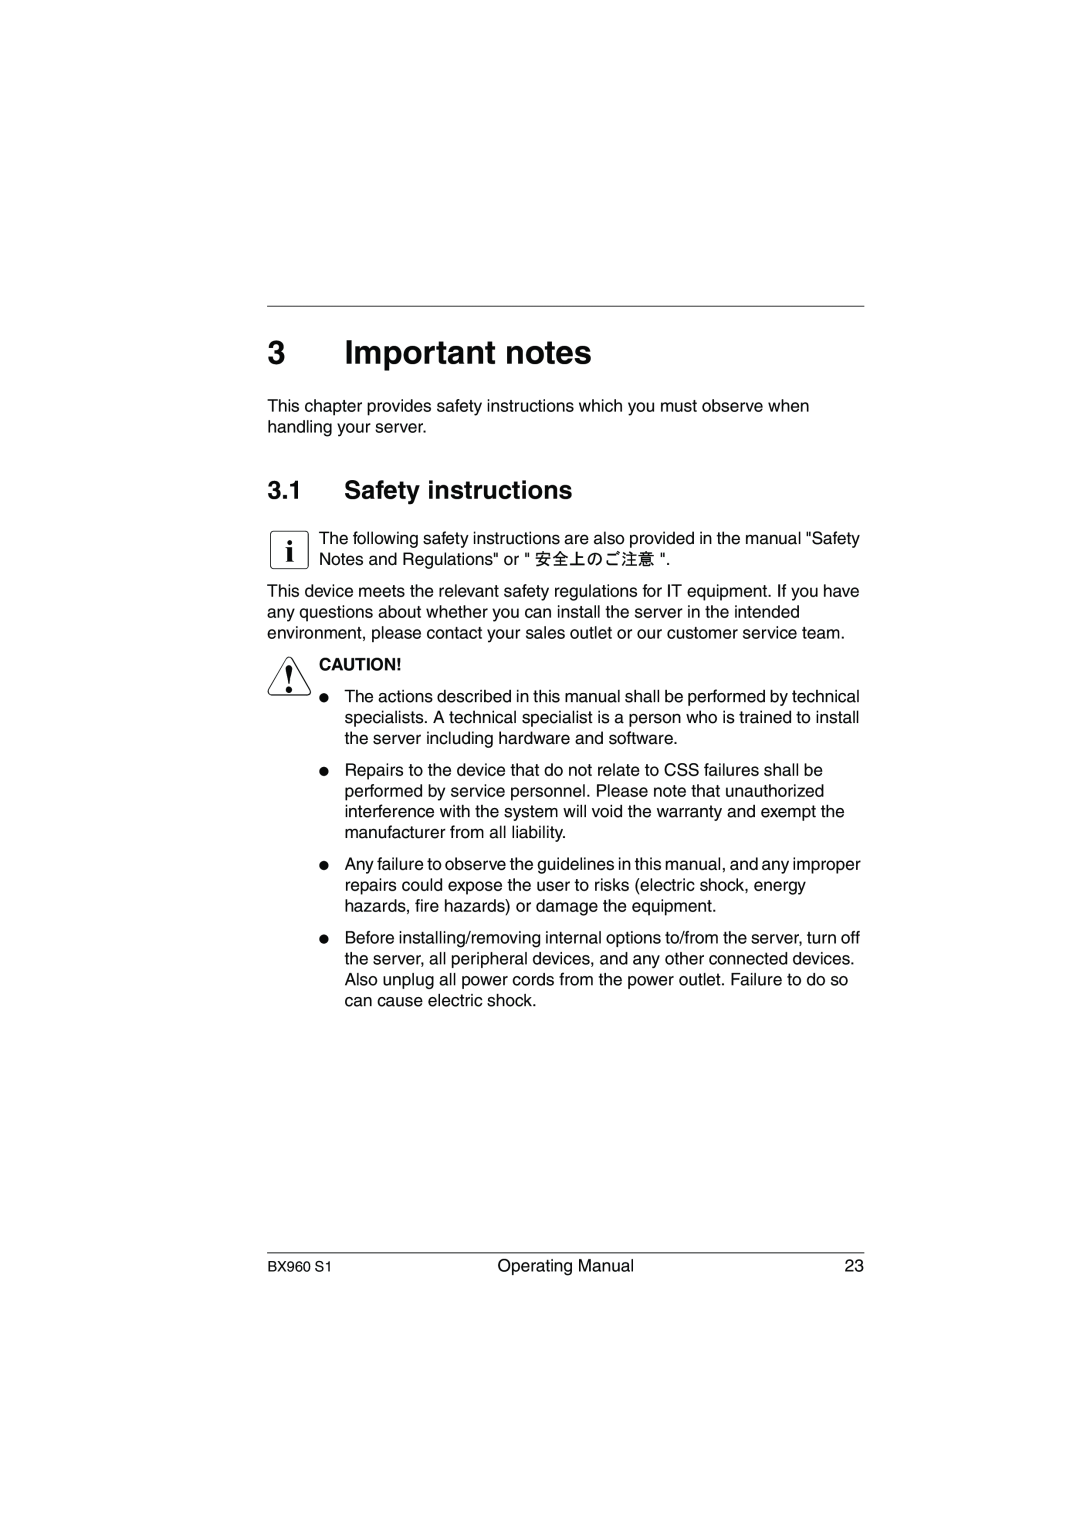 Fujitsu BX960 S1 manual Important notes, Safety instructions, V Caution 